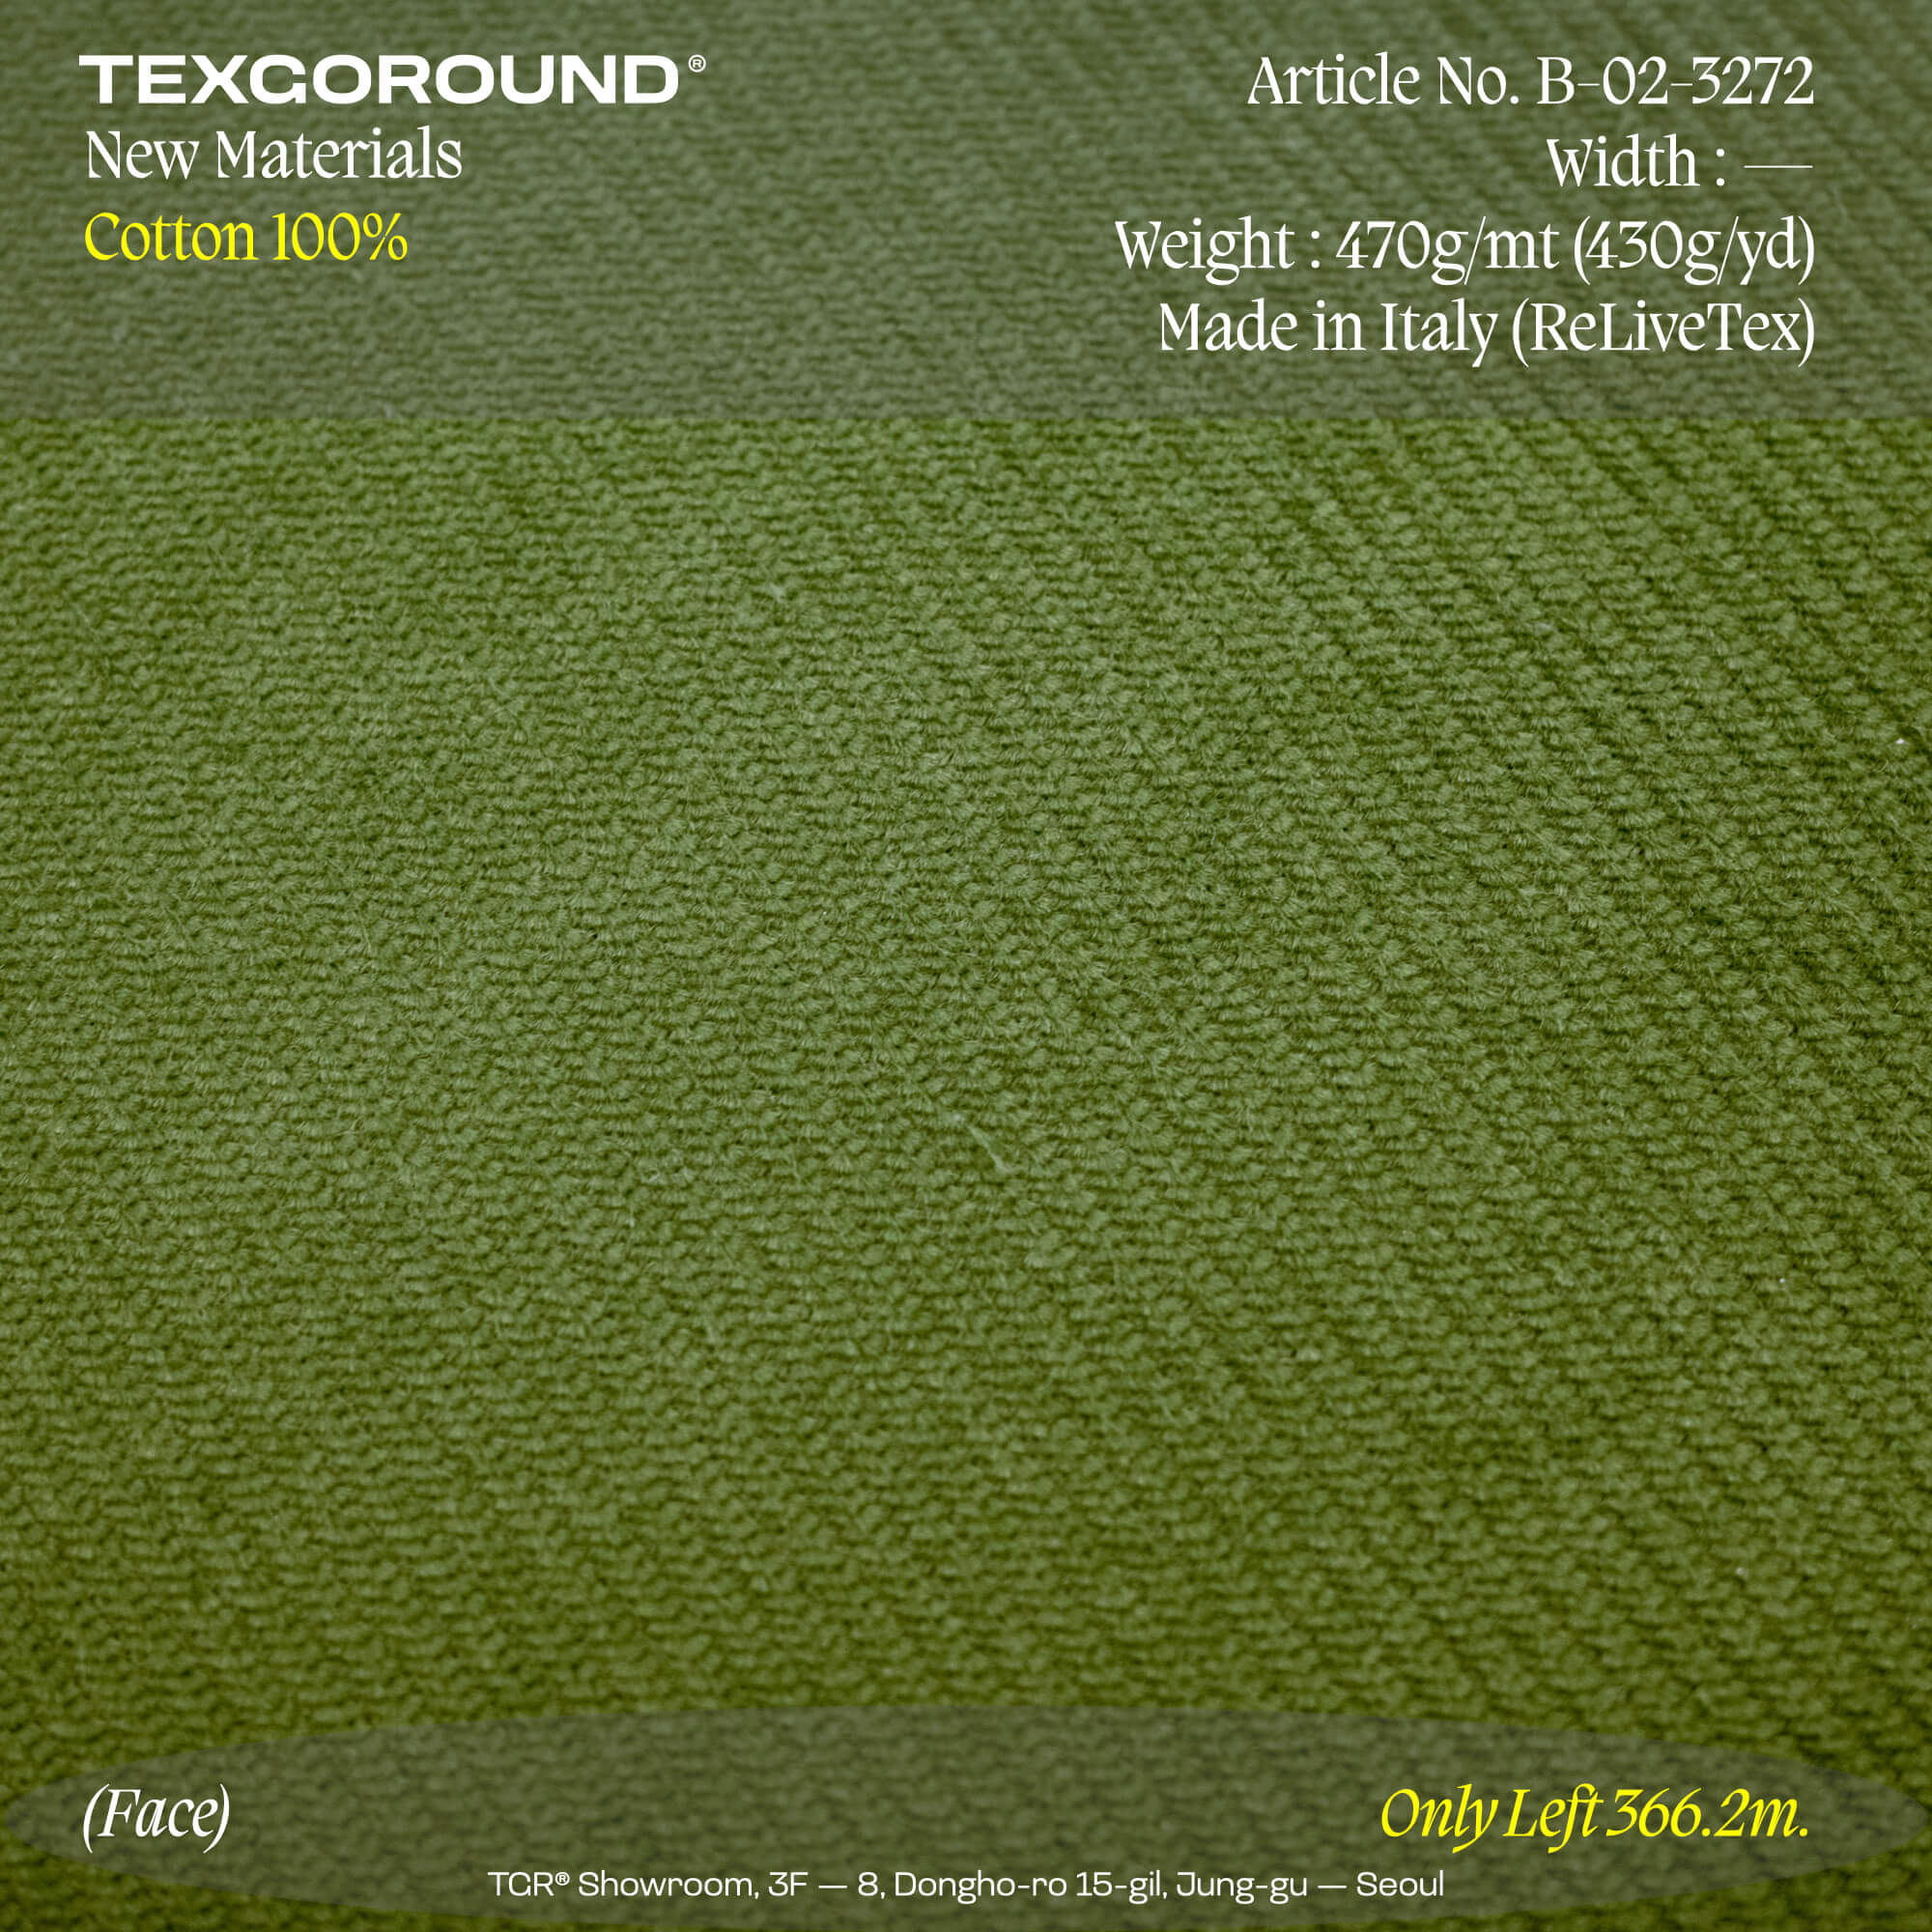 TEXGOROUND® New Materials (5) - Cotton 100%